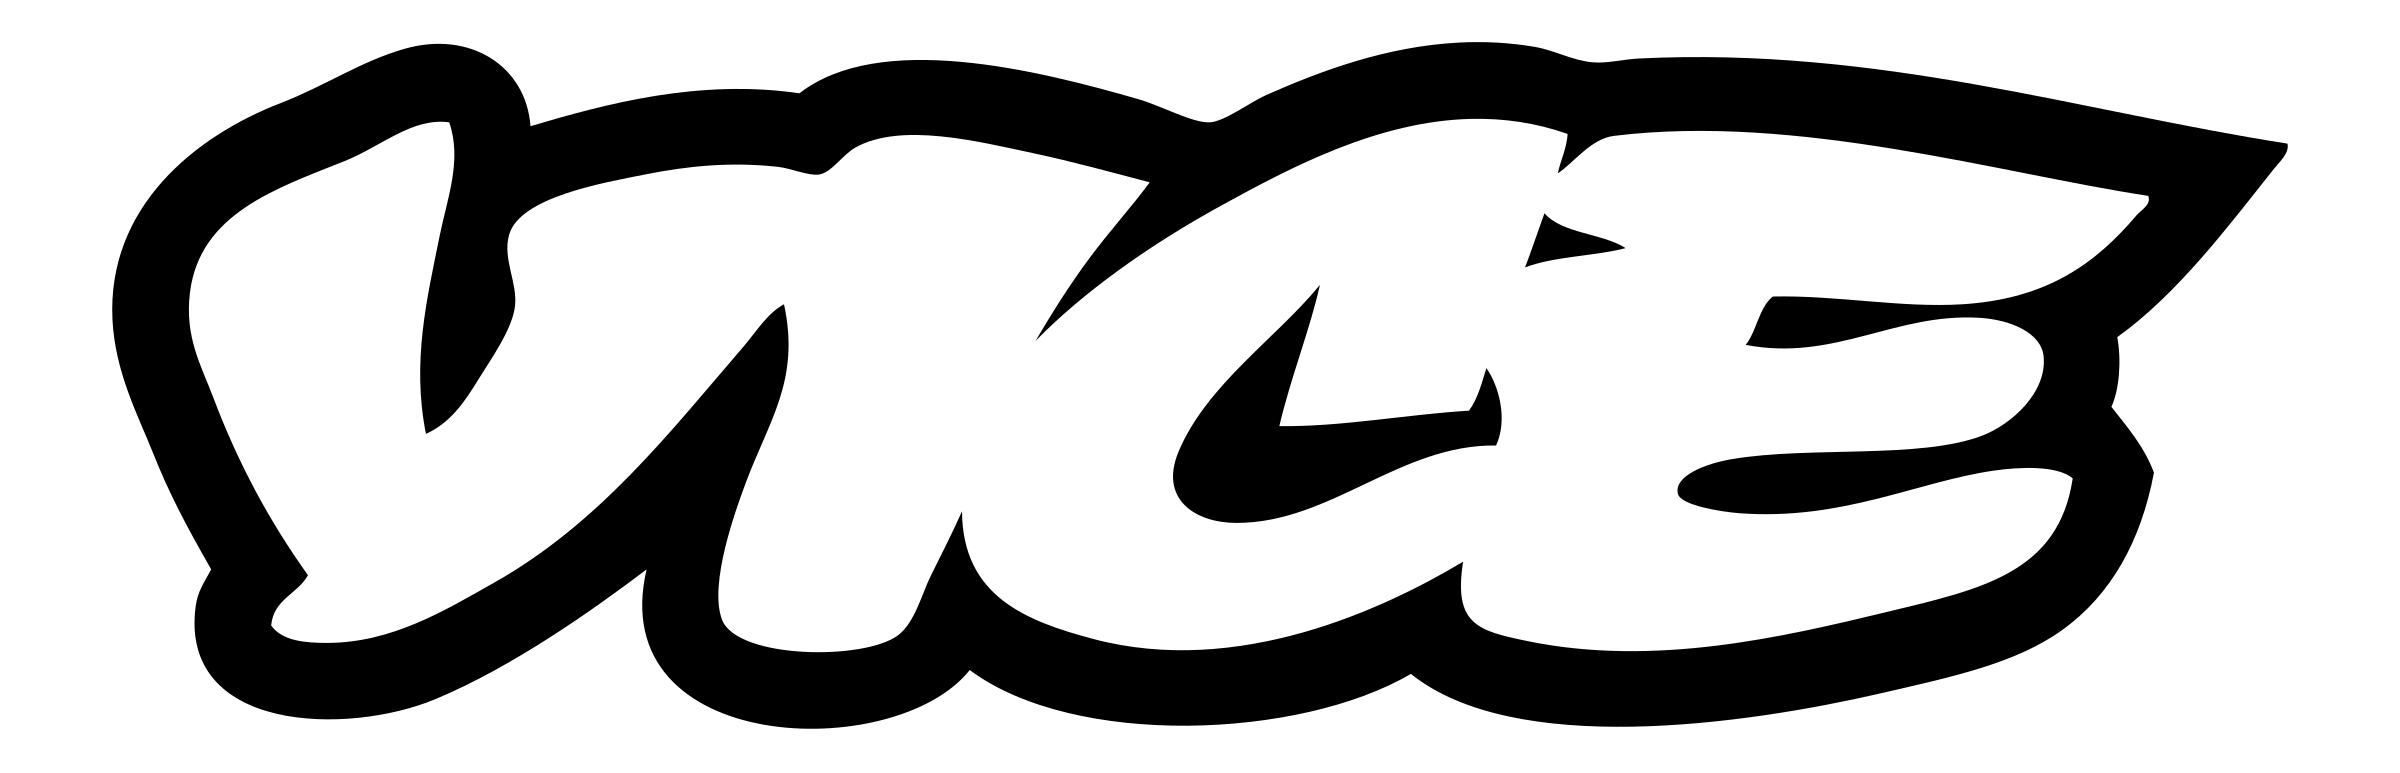 Логотип Vice.com